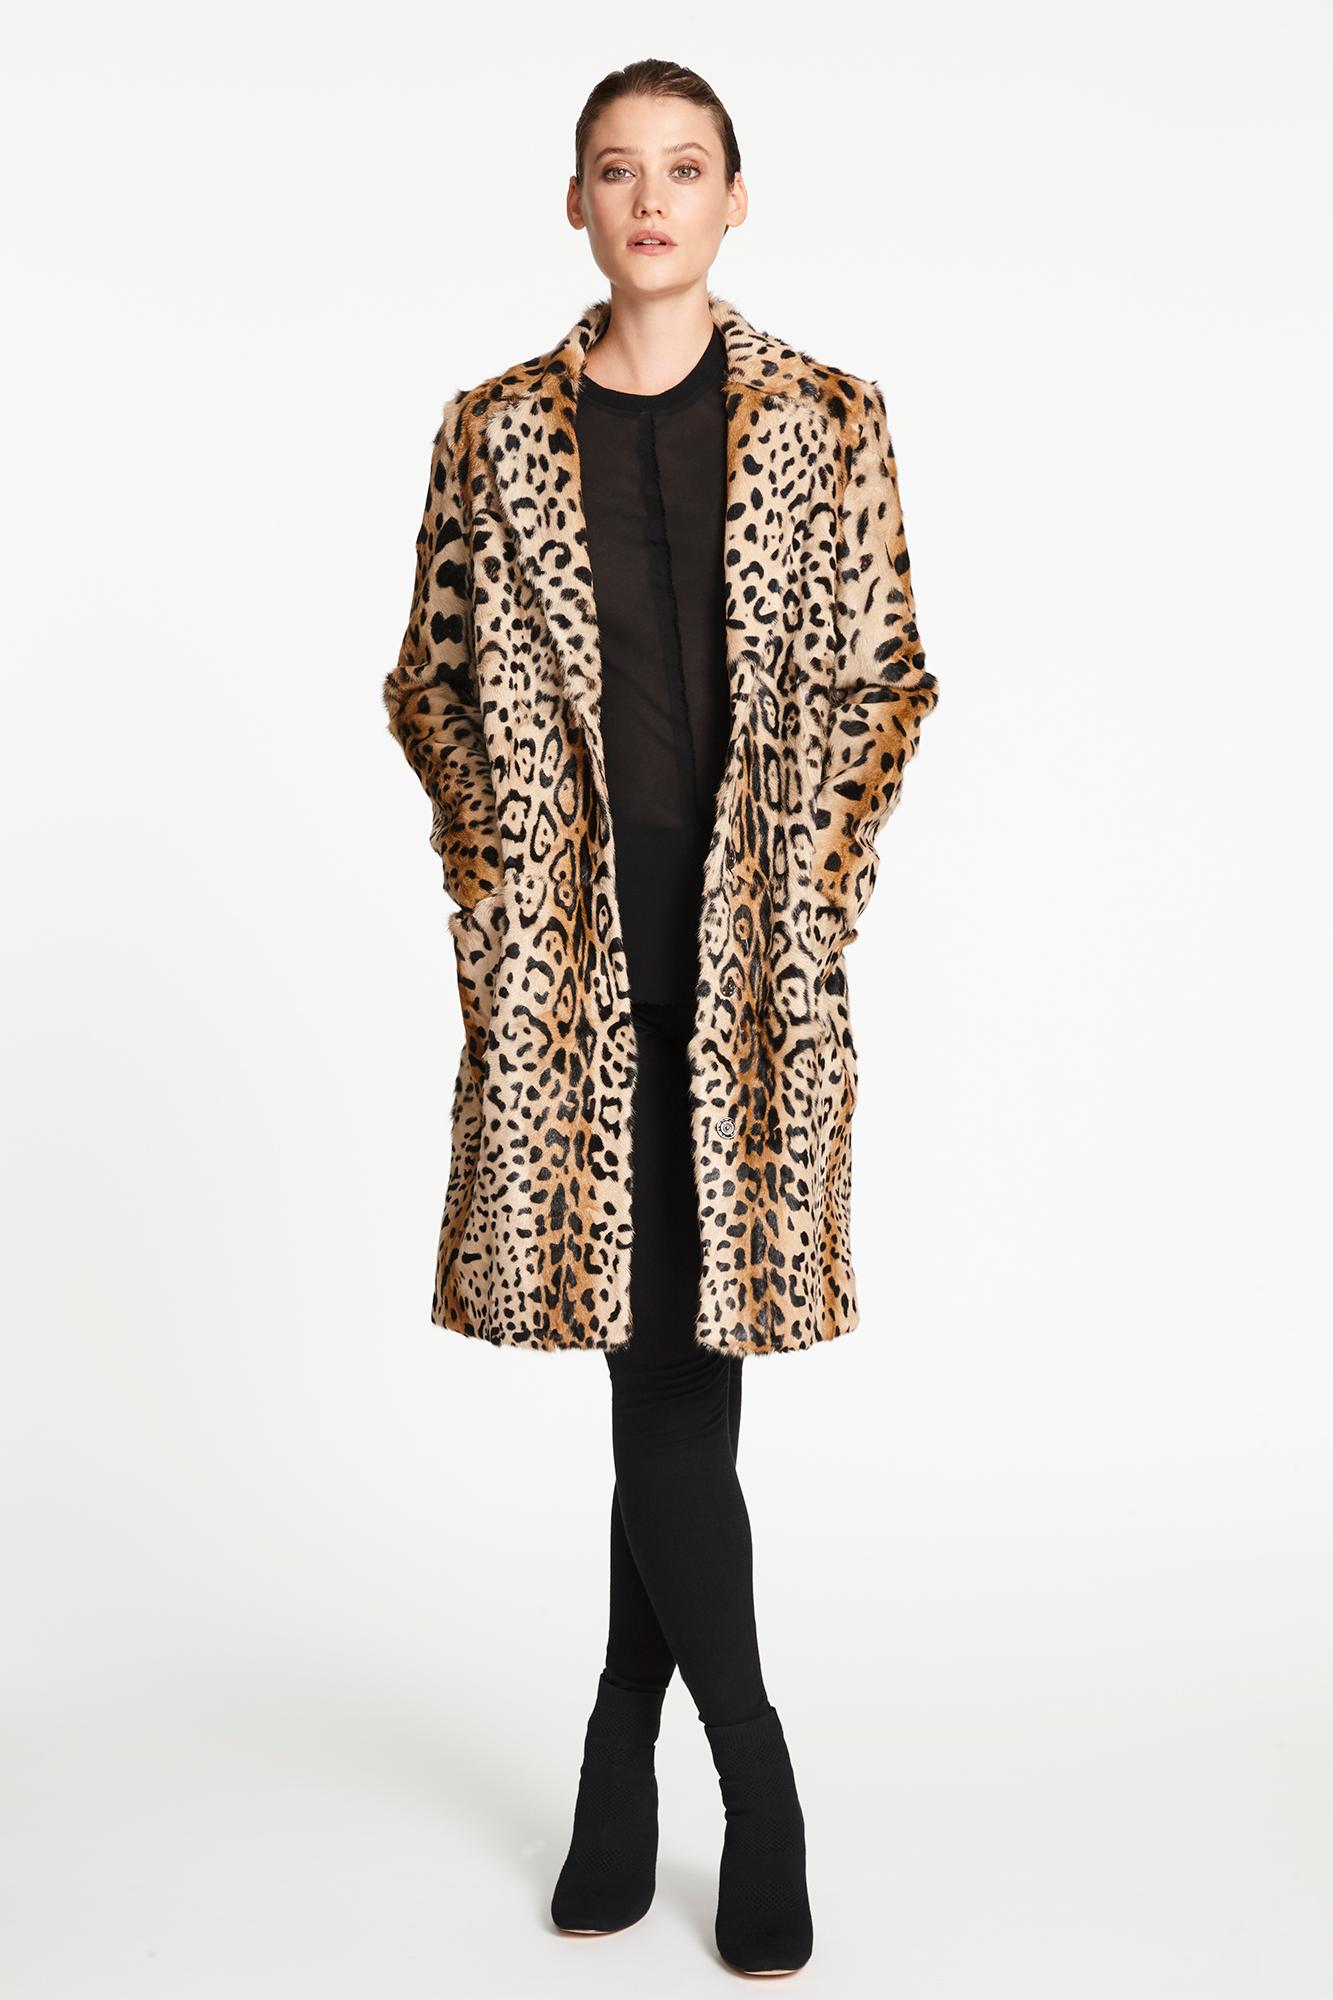 Women's Verheyen London Leopard Print Coat in Natural Goat Hair Fur UK 10 